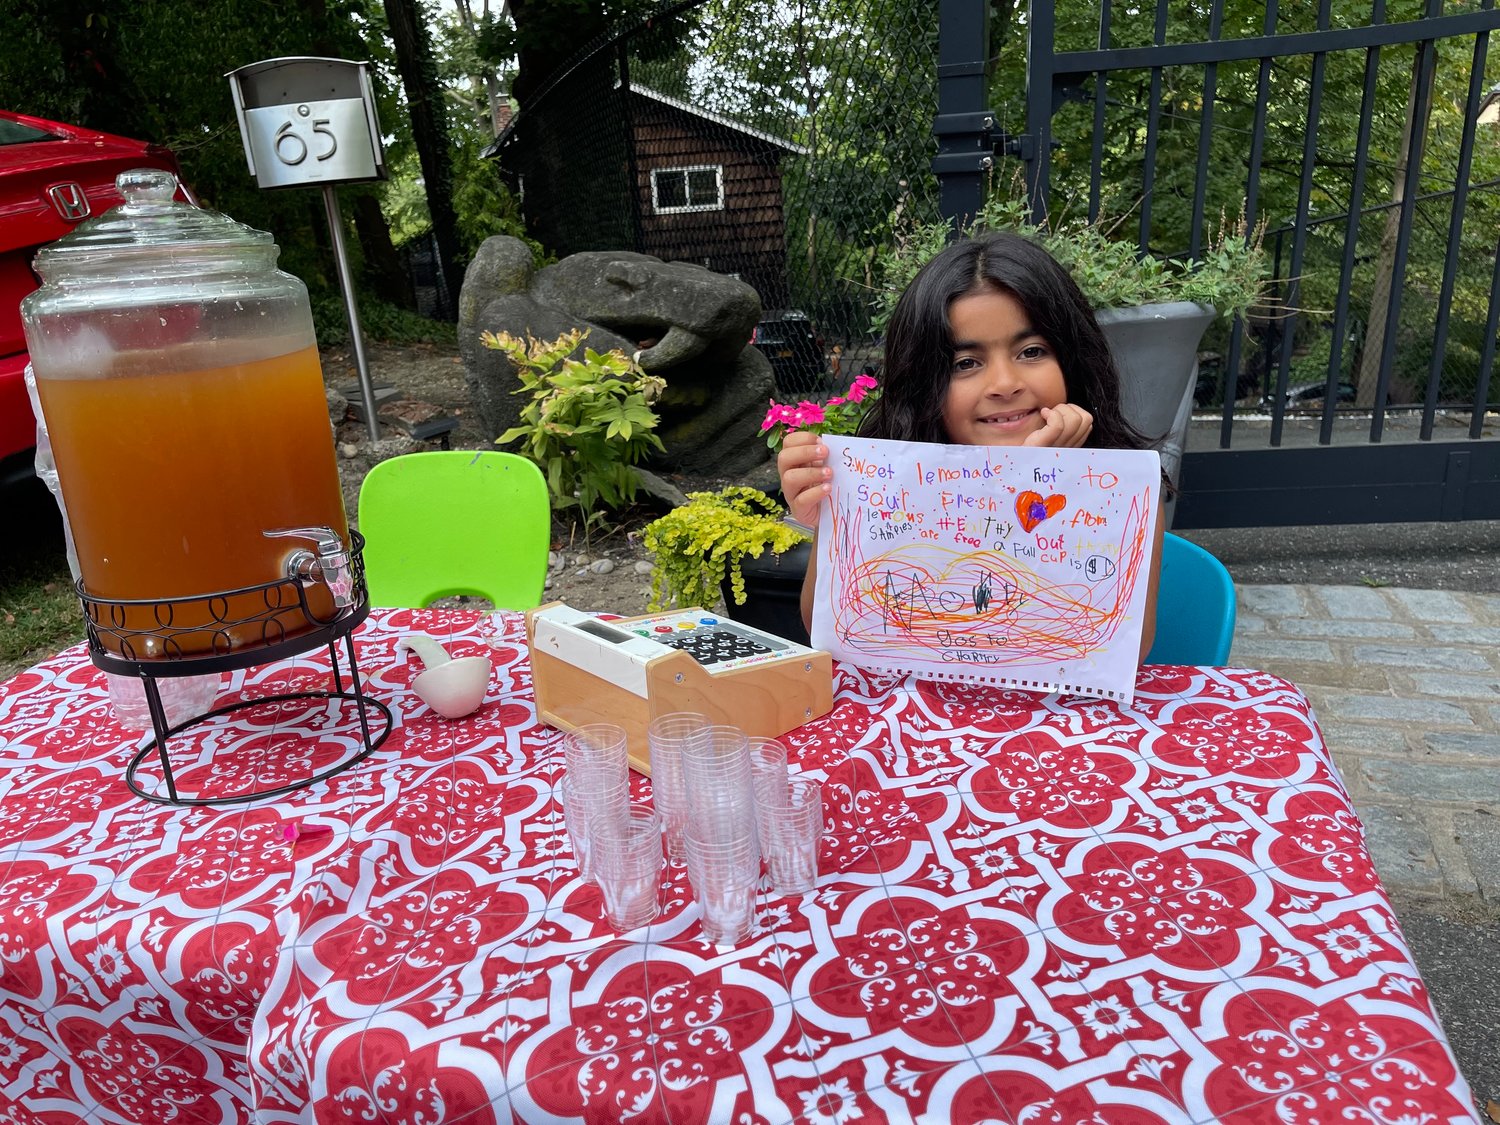 Seven-year-0ld Dahlia Balooch manned the cash register for both the lemonade and lemonade/iced tea stands, raising money for her four-legged friends.